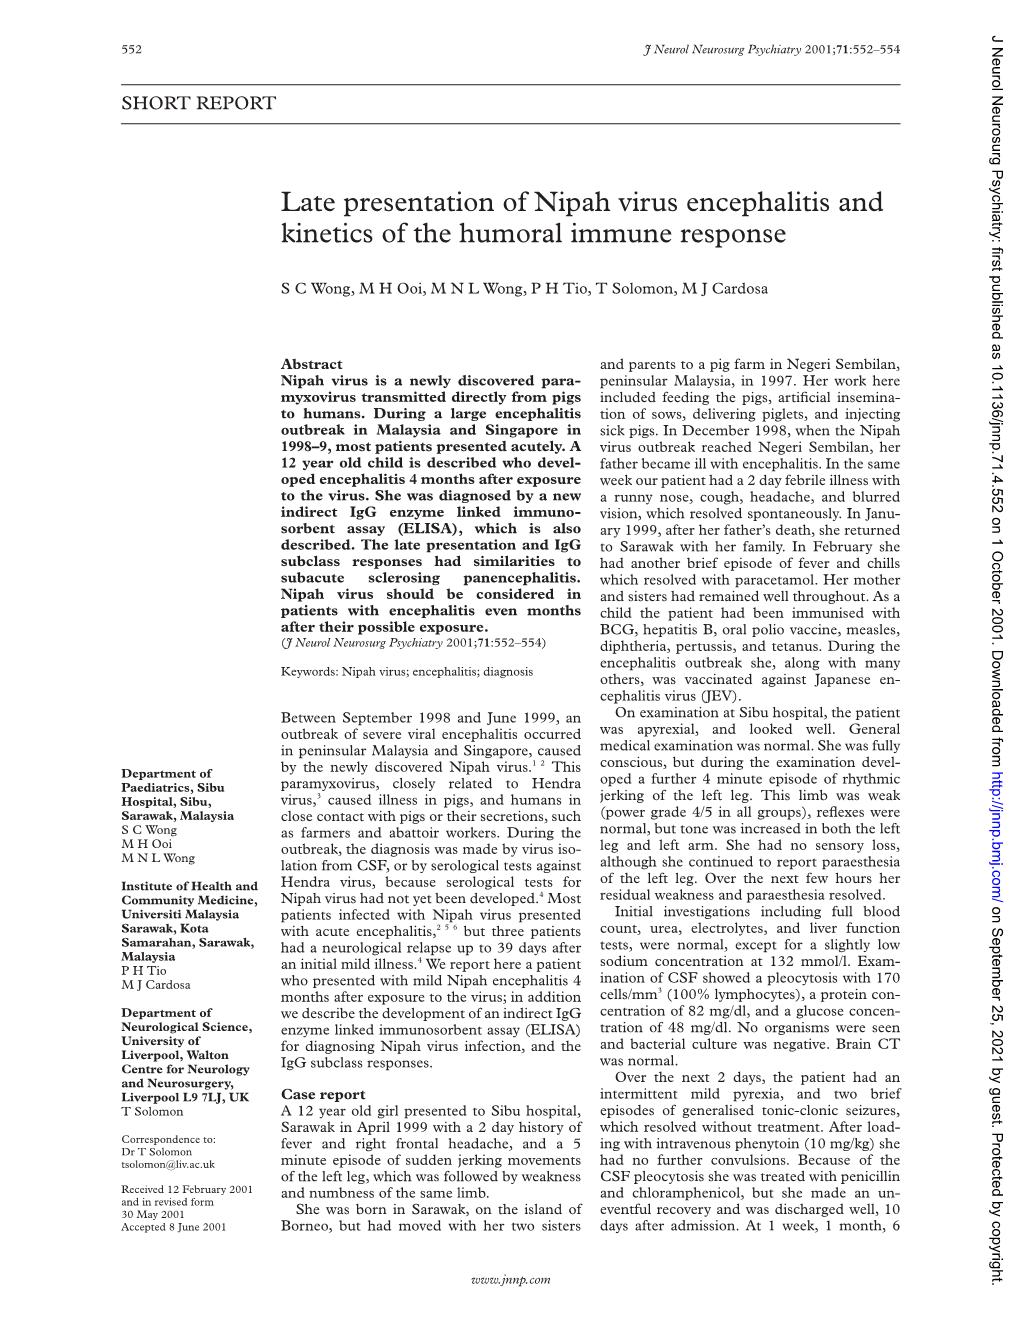 Late Presentation of Nipah Virus Encephalitis and Kinetics of the Humoral Immune Response